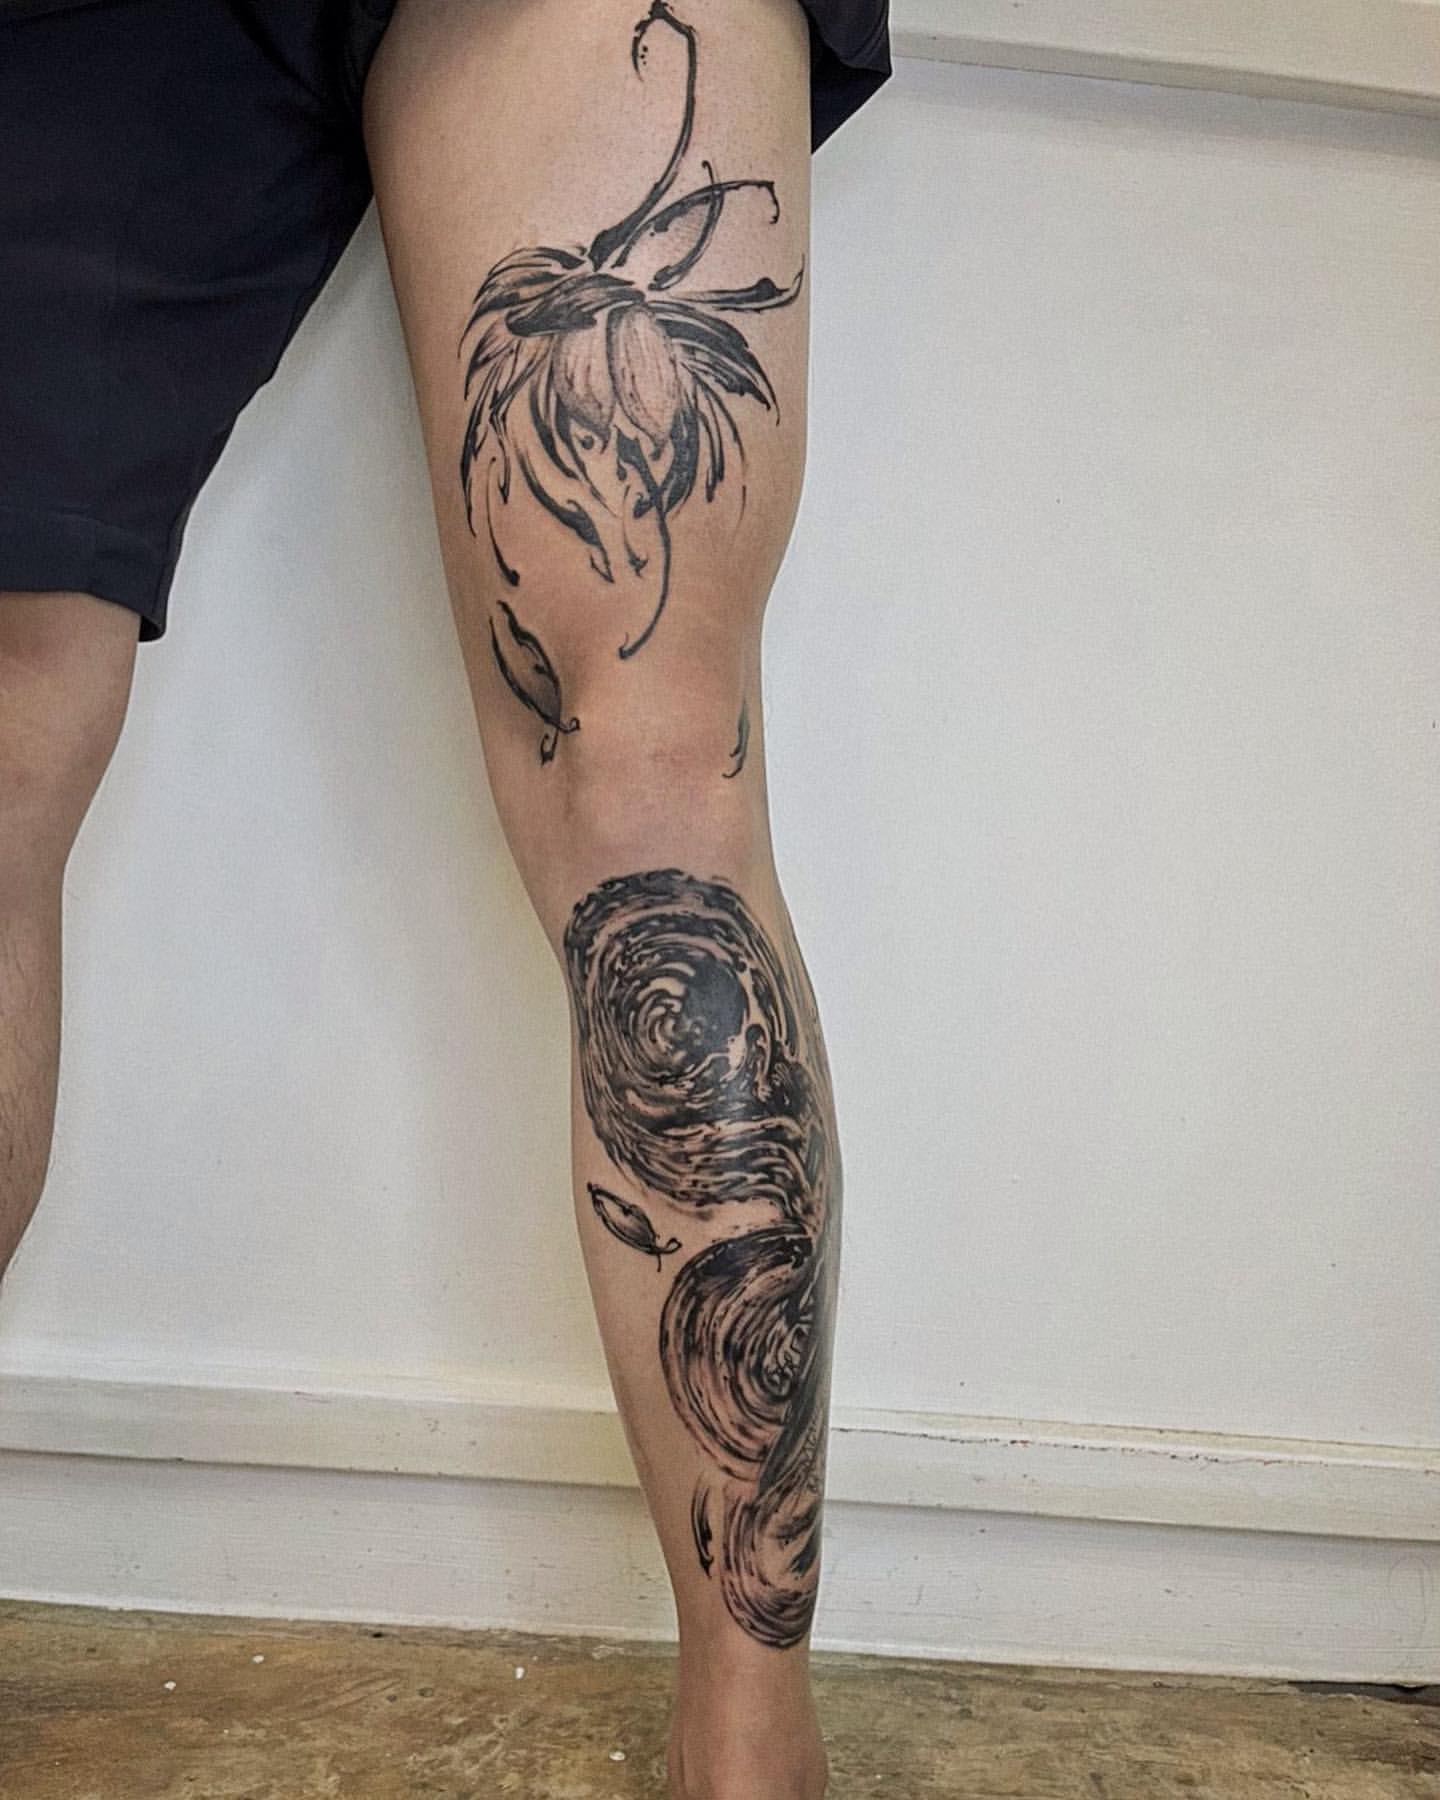 Man Utd starlet Alejandro Garnacho shows off incredible new leg tattoo  inspired by favourite cartoon as kid | The Sun